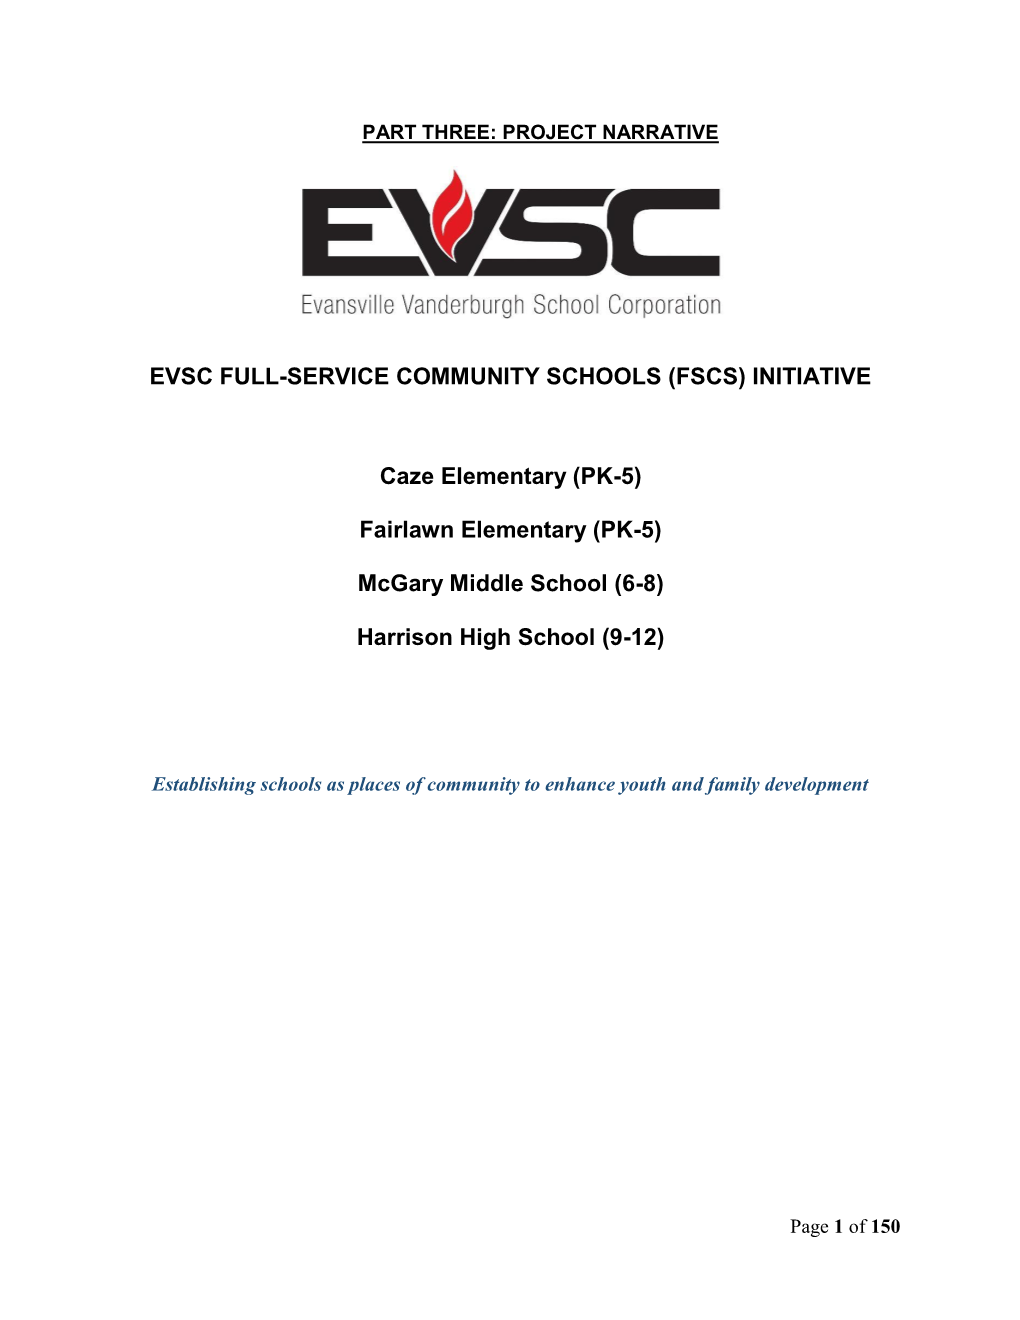 EVSC FULL-SERVICE COMMUNITY SCHOOLS (FSCS) INITIATIVE Caze Elementary